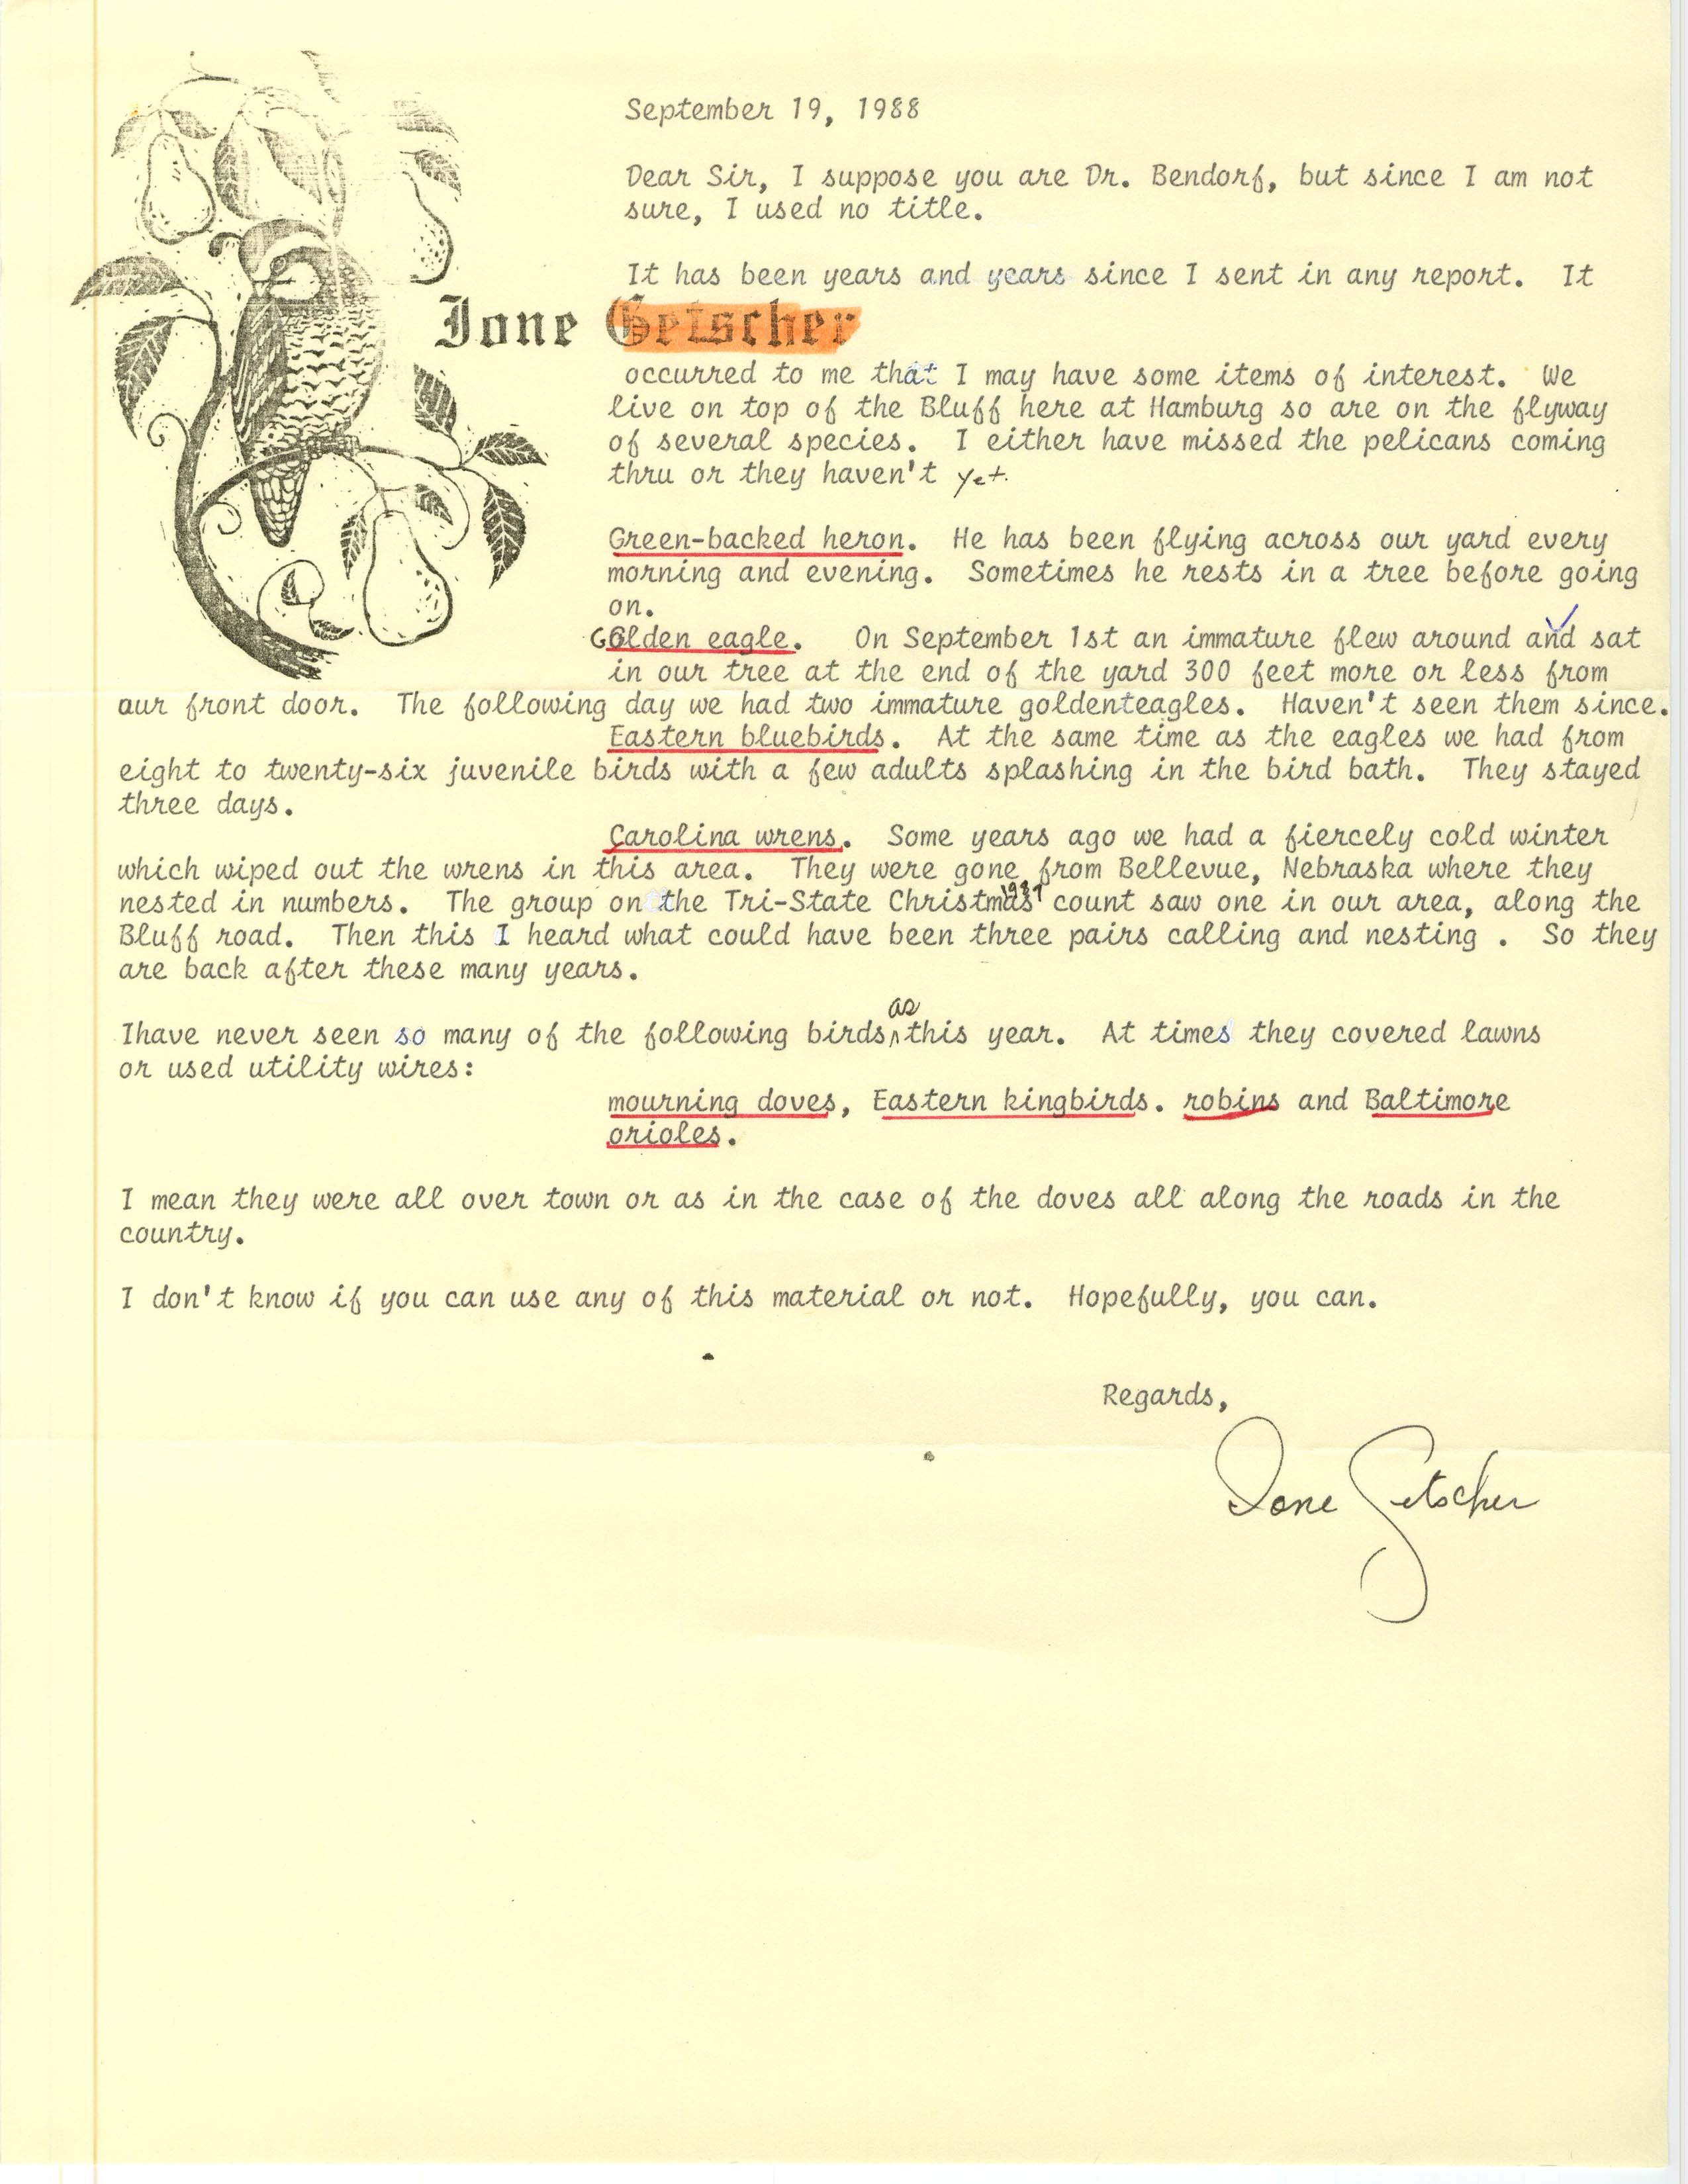 Ione Getscher letter to Carl J. Bendorf regarding bird sightings, September 19, 1988